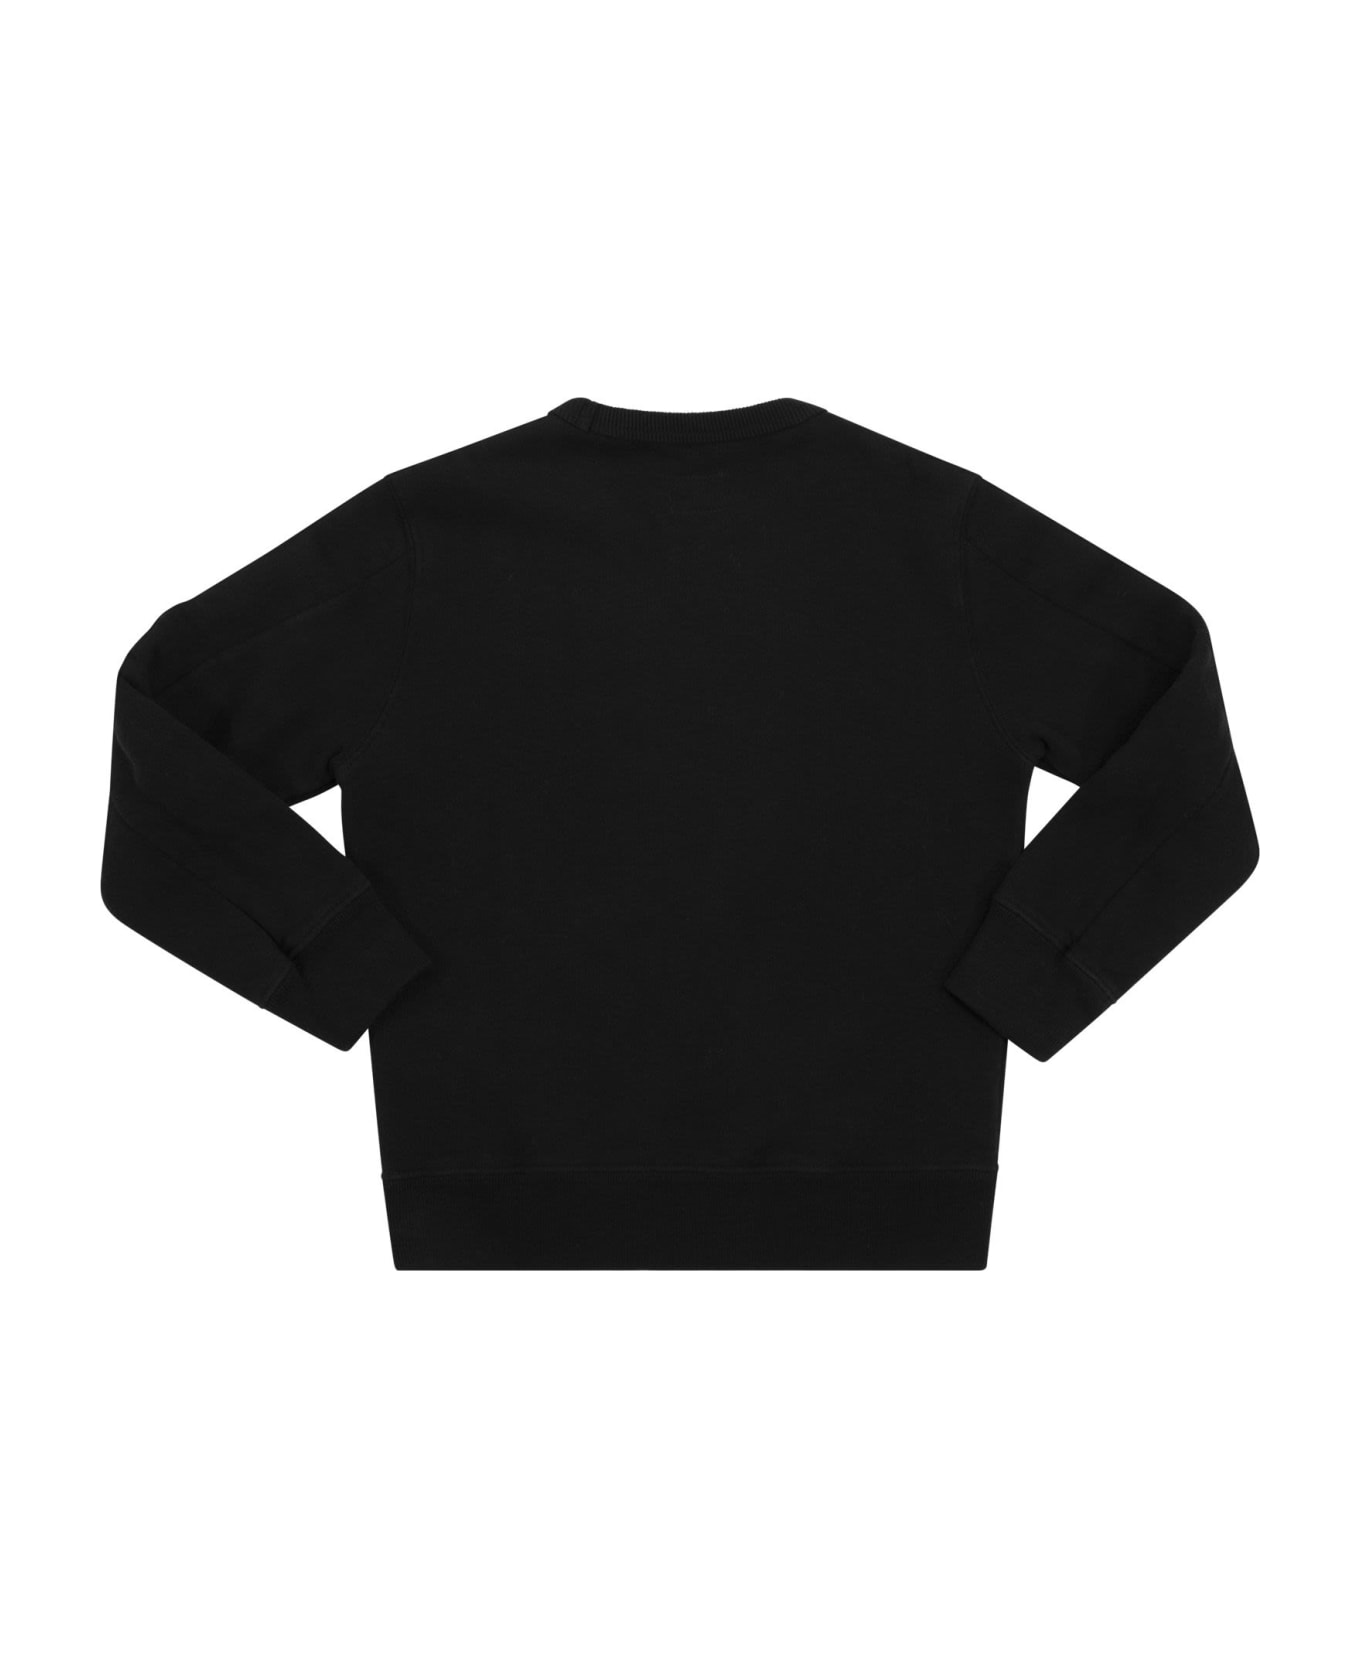 C.P. Company U16 Basic - Crew-neck Sweatshirt - Black